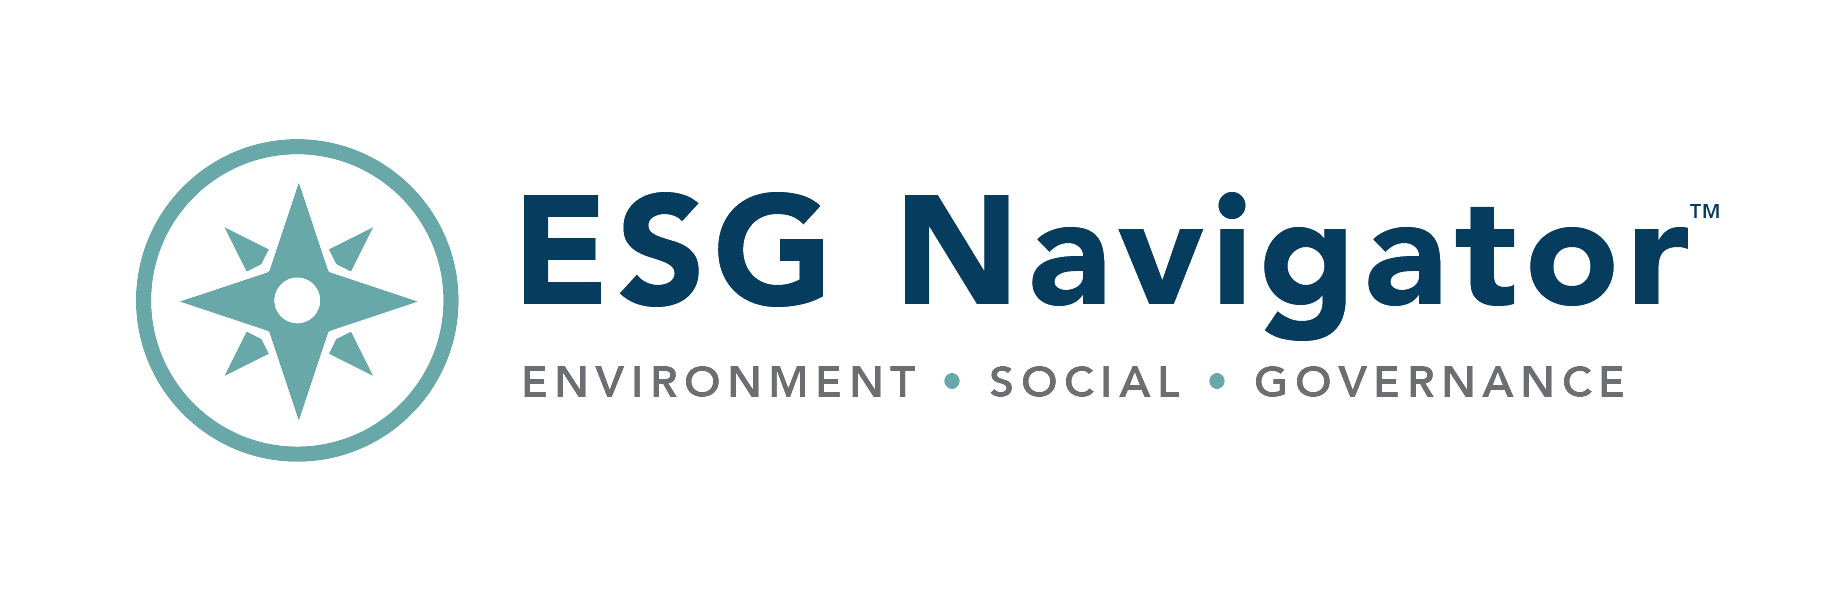 ESG Navigator